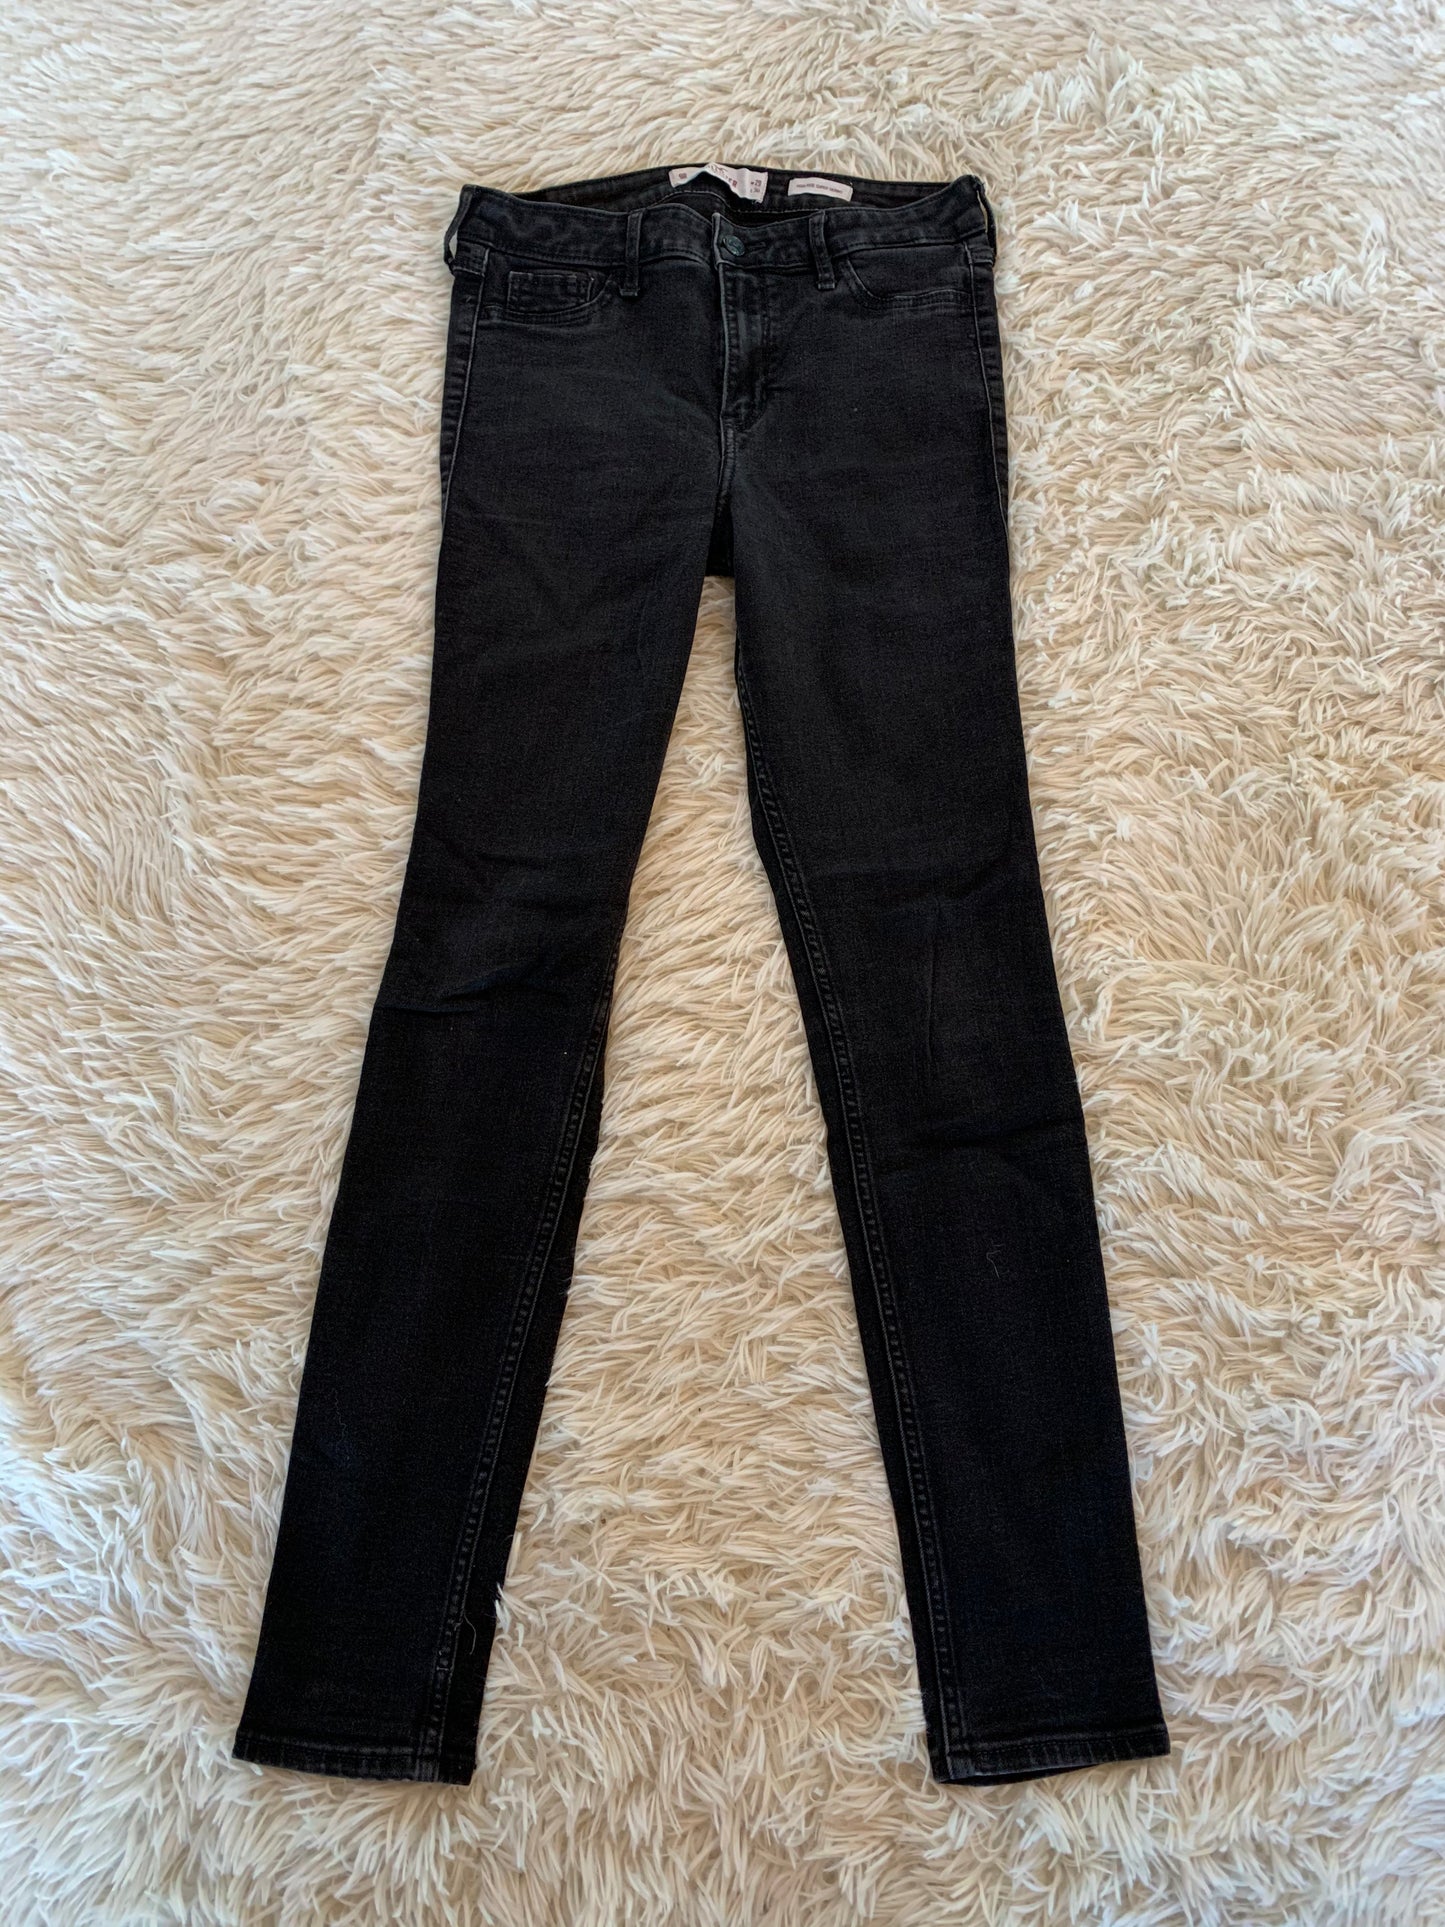 Hollister Women's High Rise Super Skinny Jeans Black - Size 29 x 30